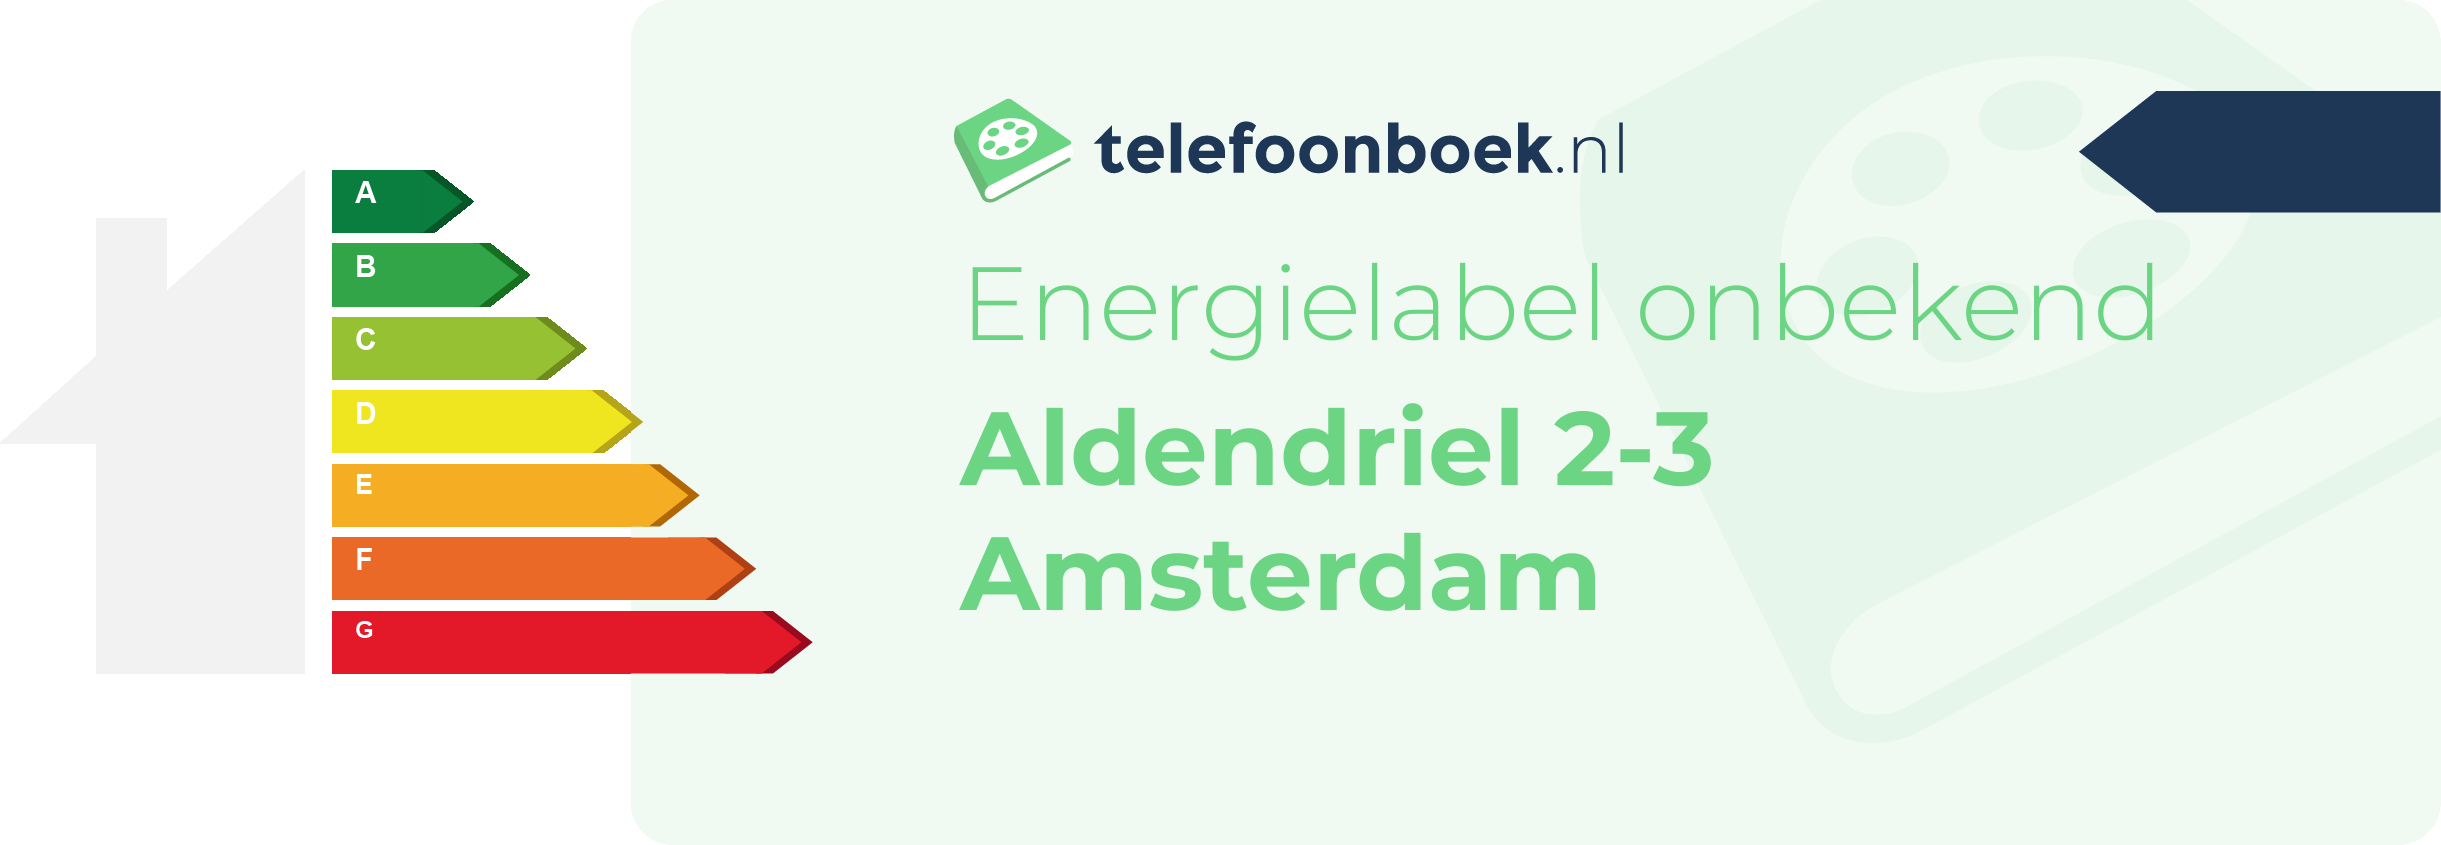 Energielabel Aldendriel 2-3 Amsterdam